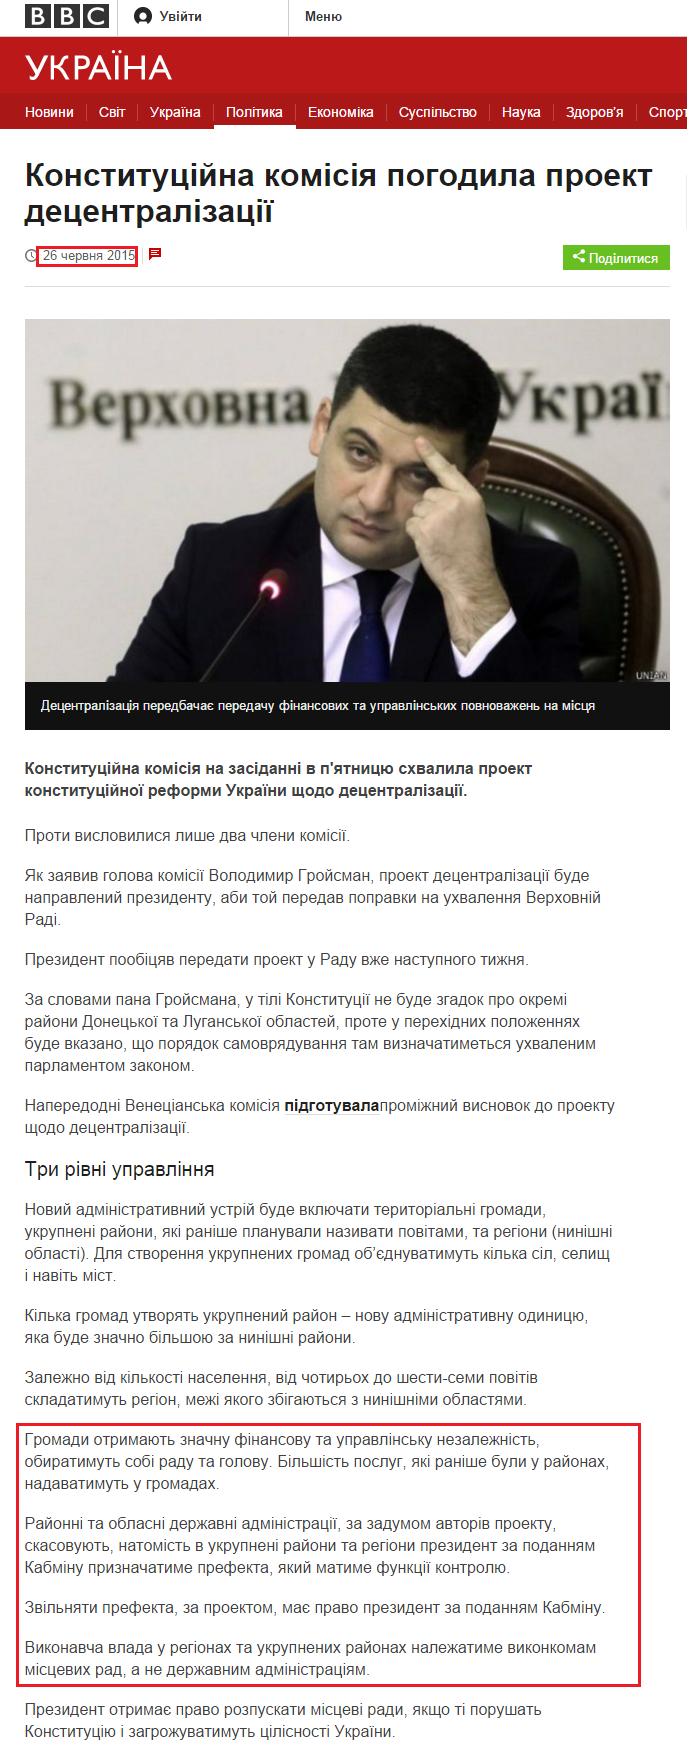 http://www.bbc.com/ukrainian/politics/2015/06/150626_const_reform_apr_vc